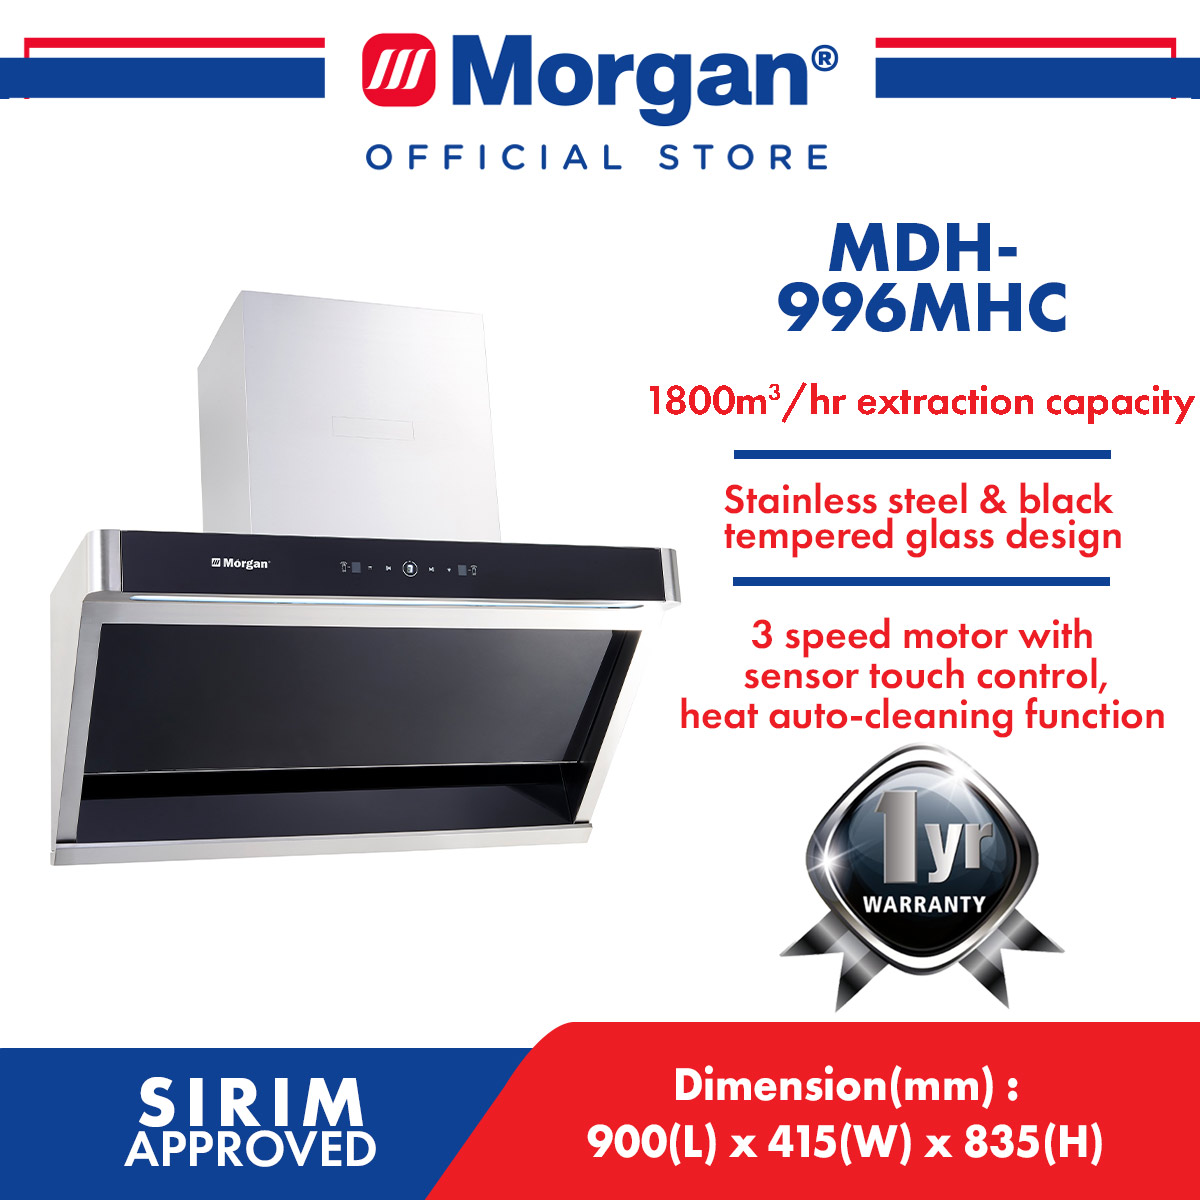 MORGAN MDH-996MHC DESIGNER KITCHEN CHIMNEY HOOD 900MM/1800M3